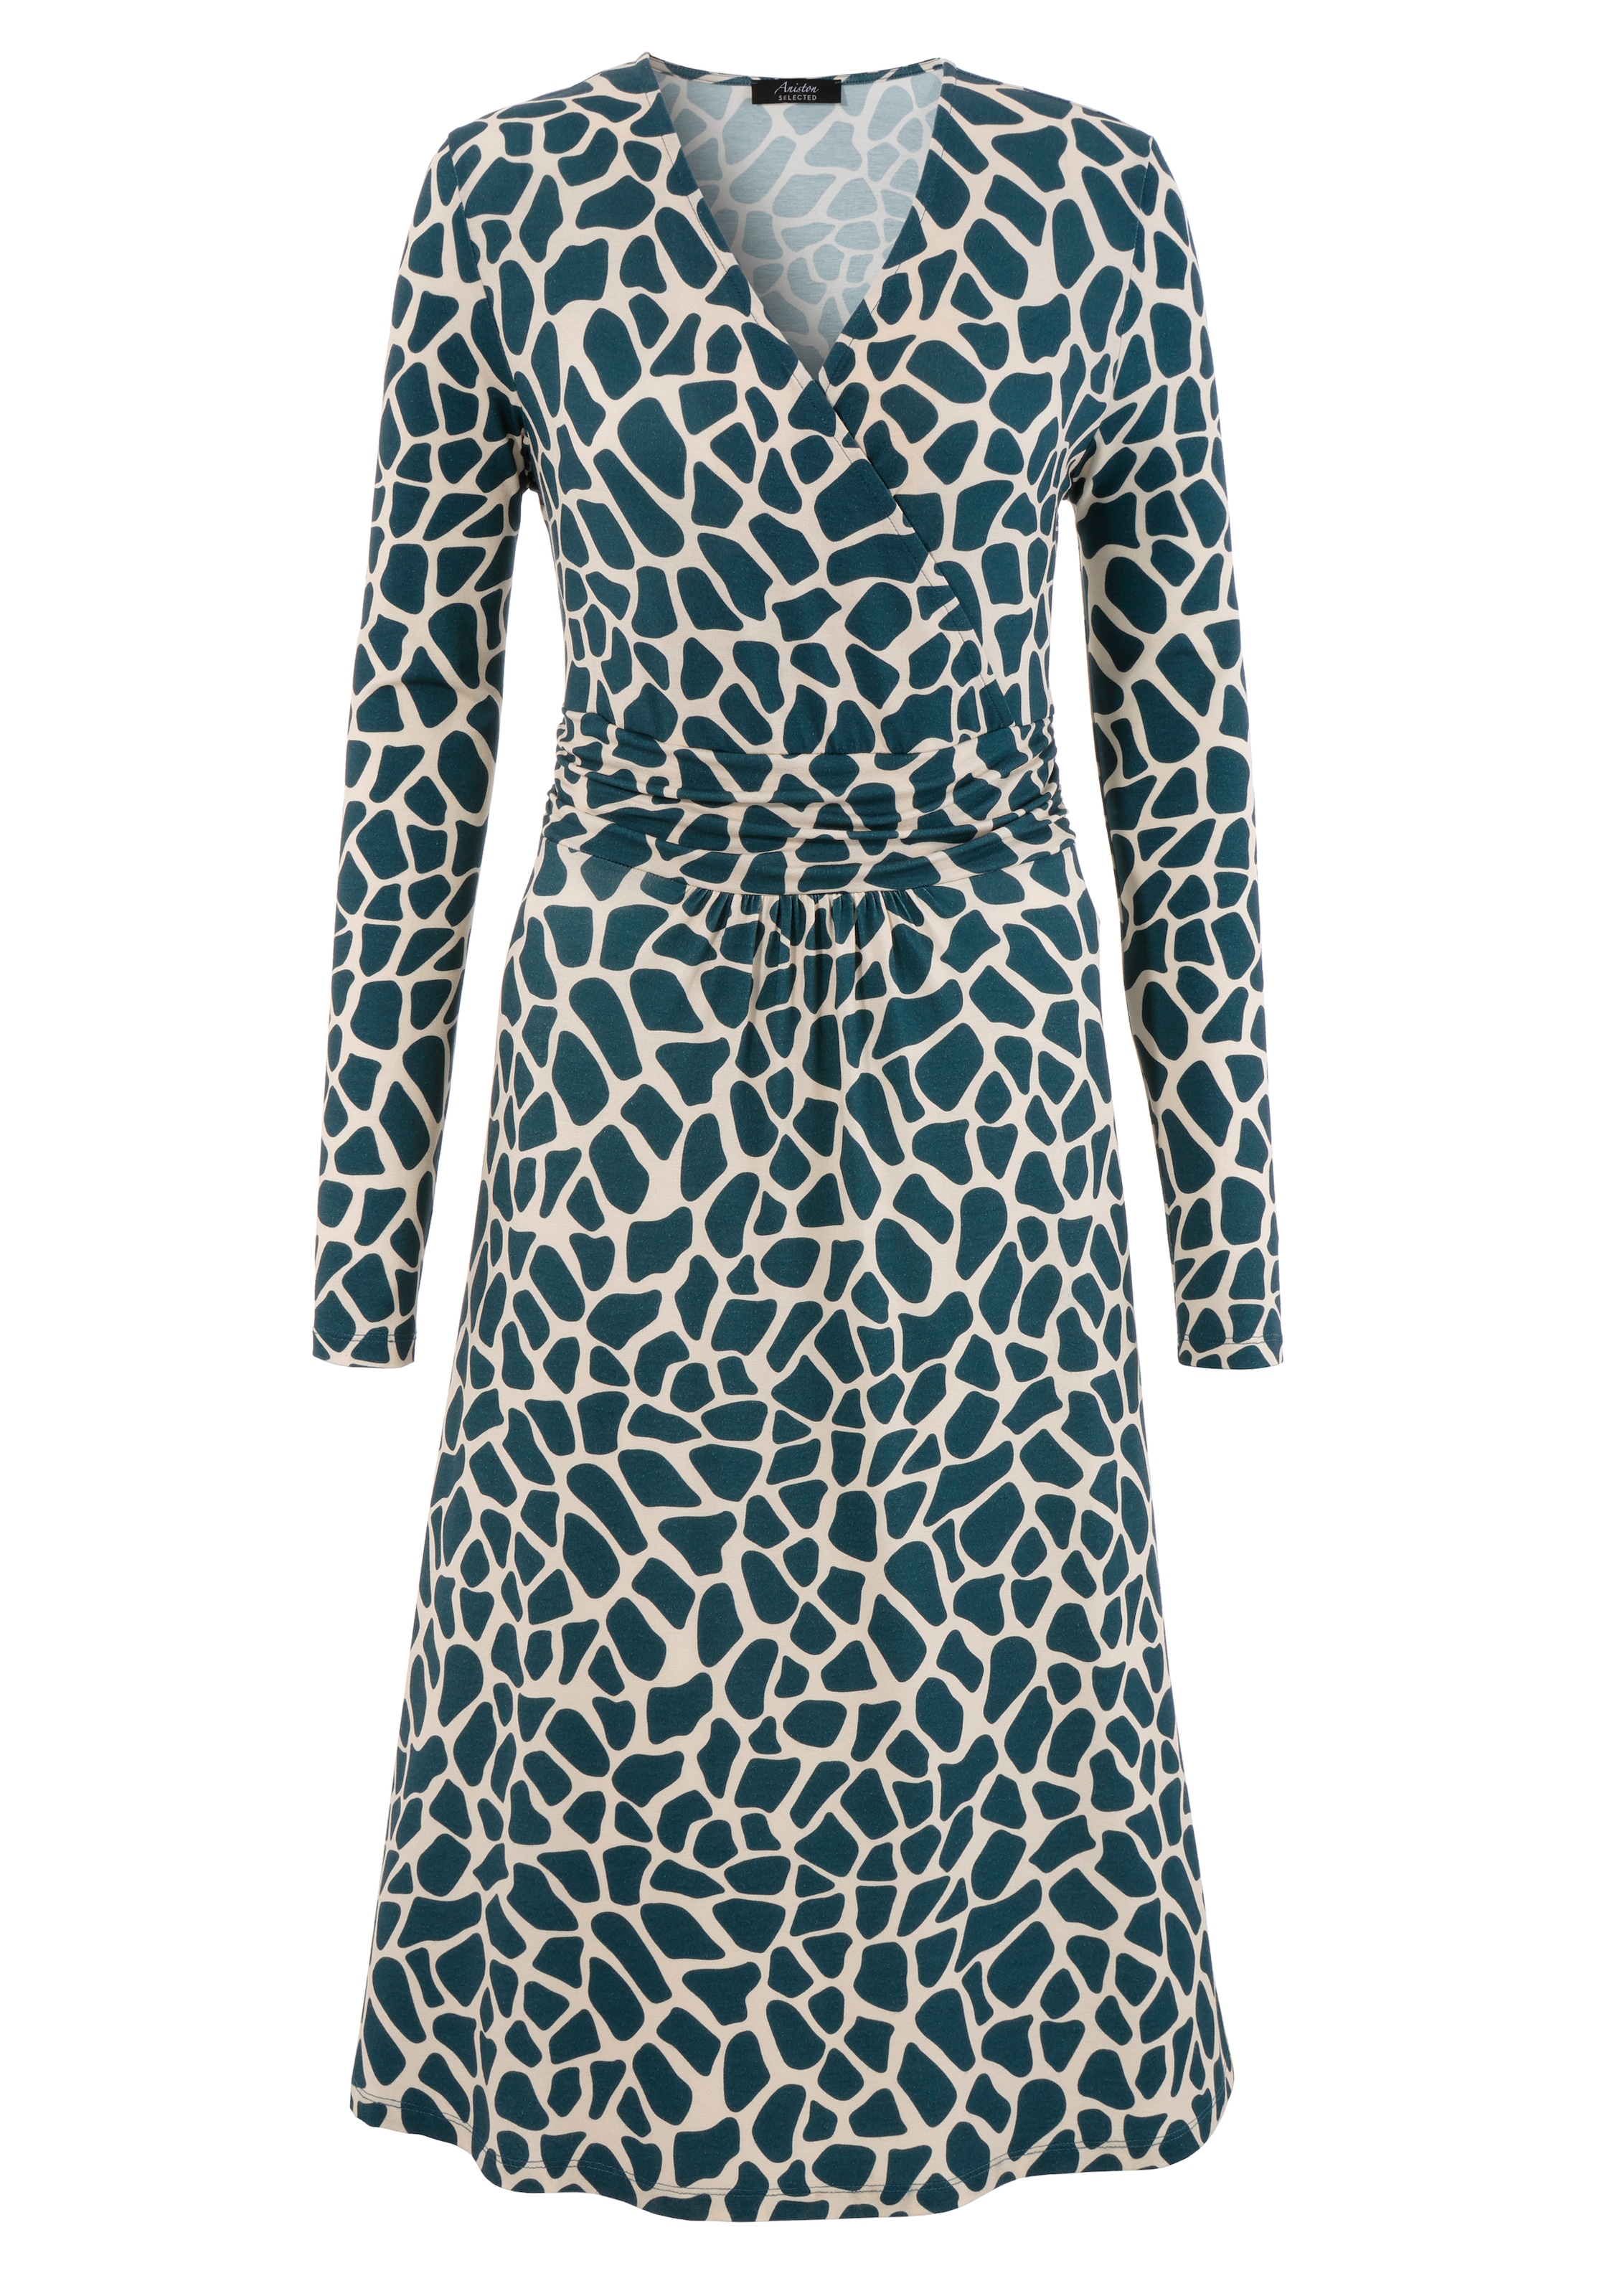 Aniston SELECTED Jerseykleid, mit farbigem animal-print kaufen